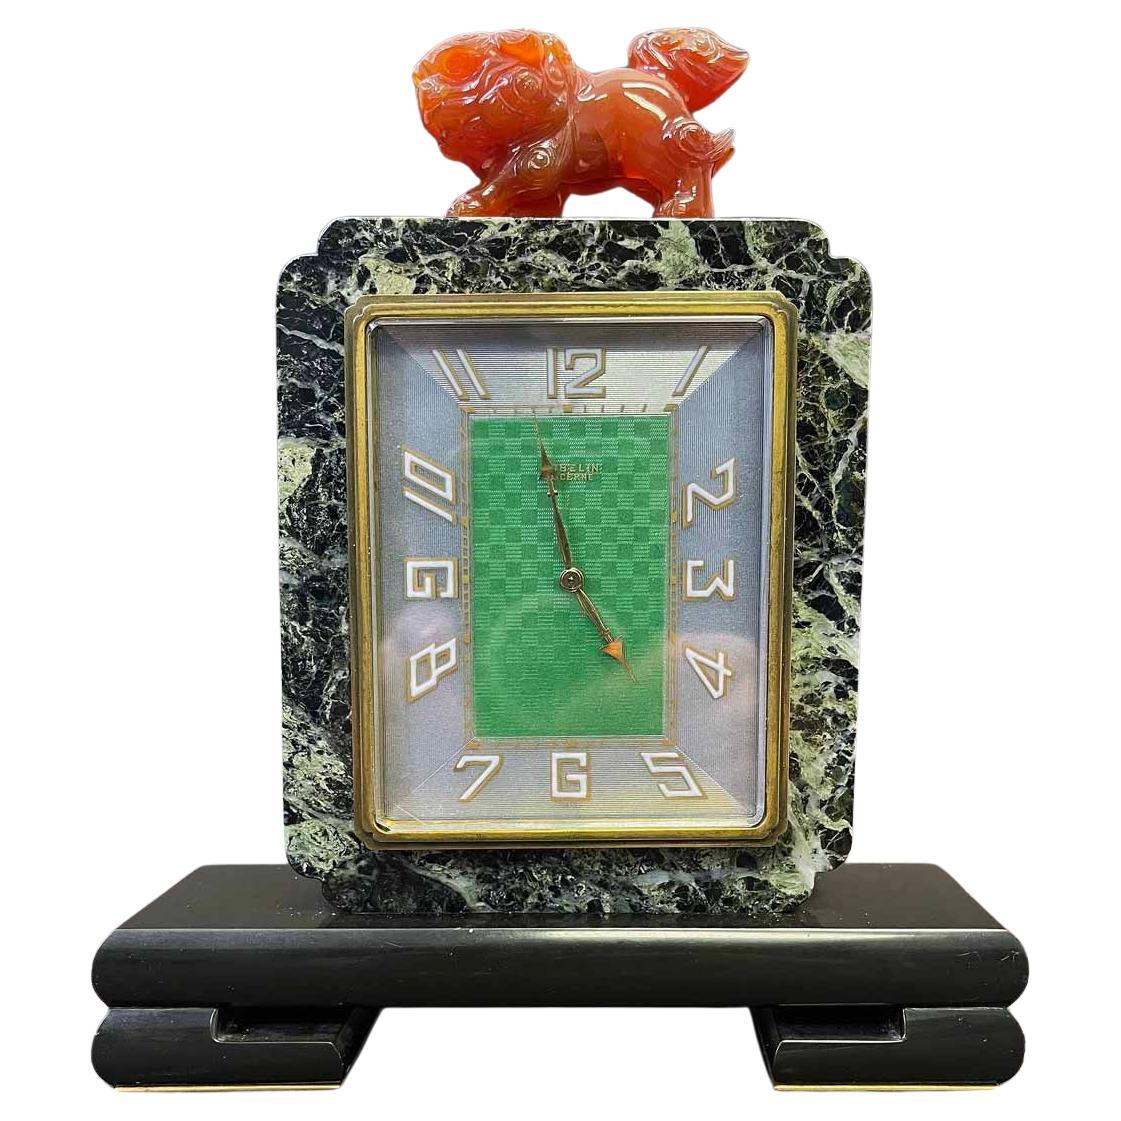 "Art Deco Clock in Chinese Manner", Gübelin Clock w/ Red Hardstone Finial